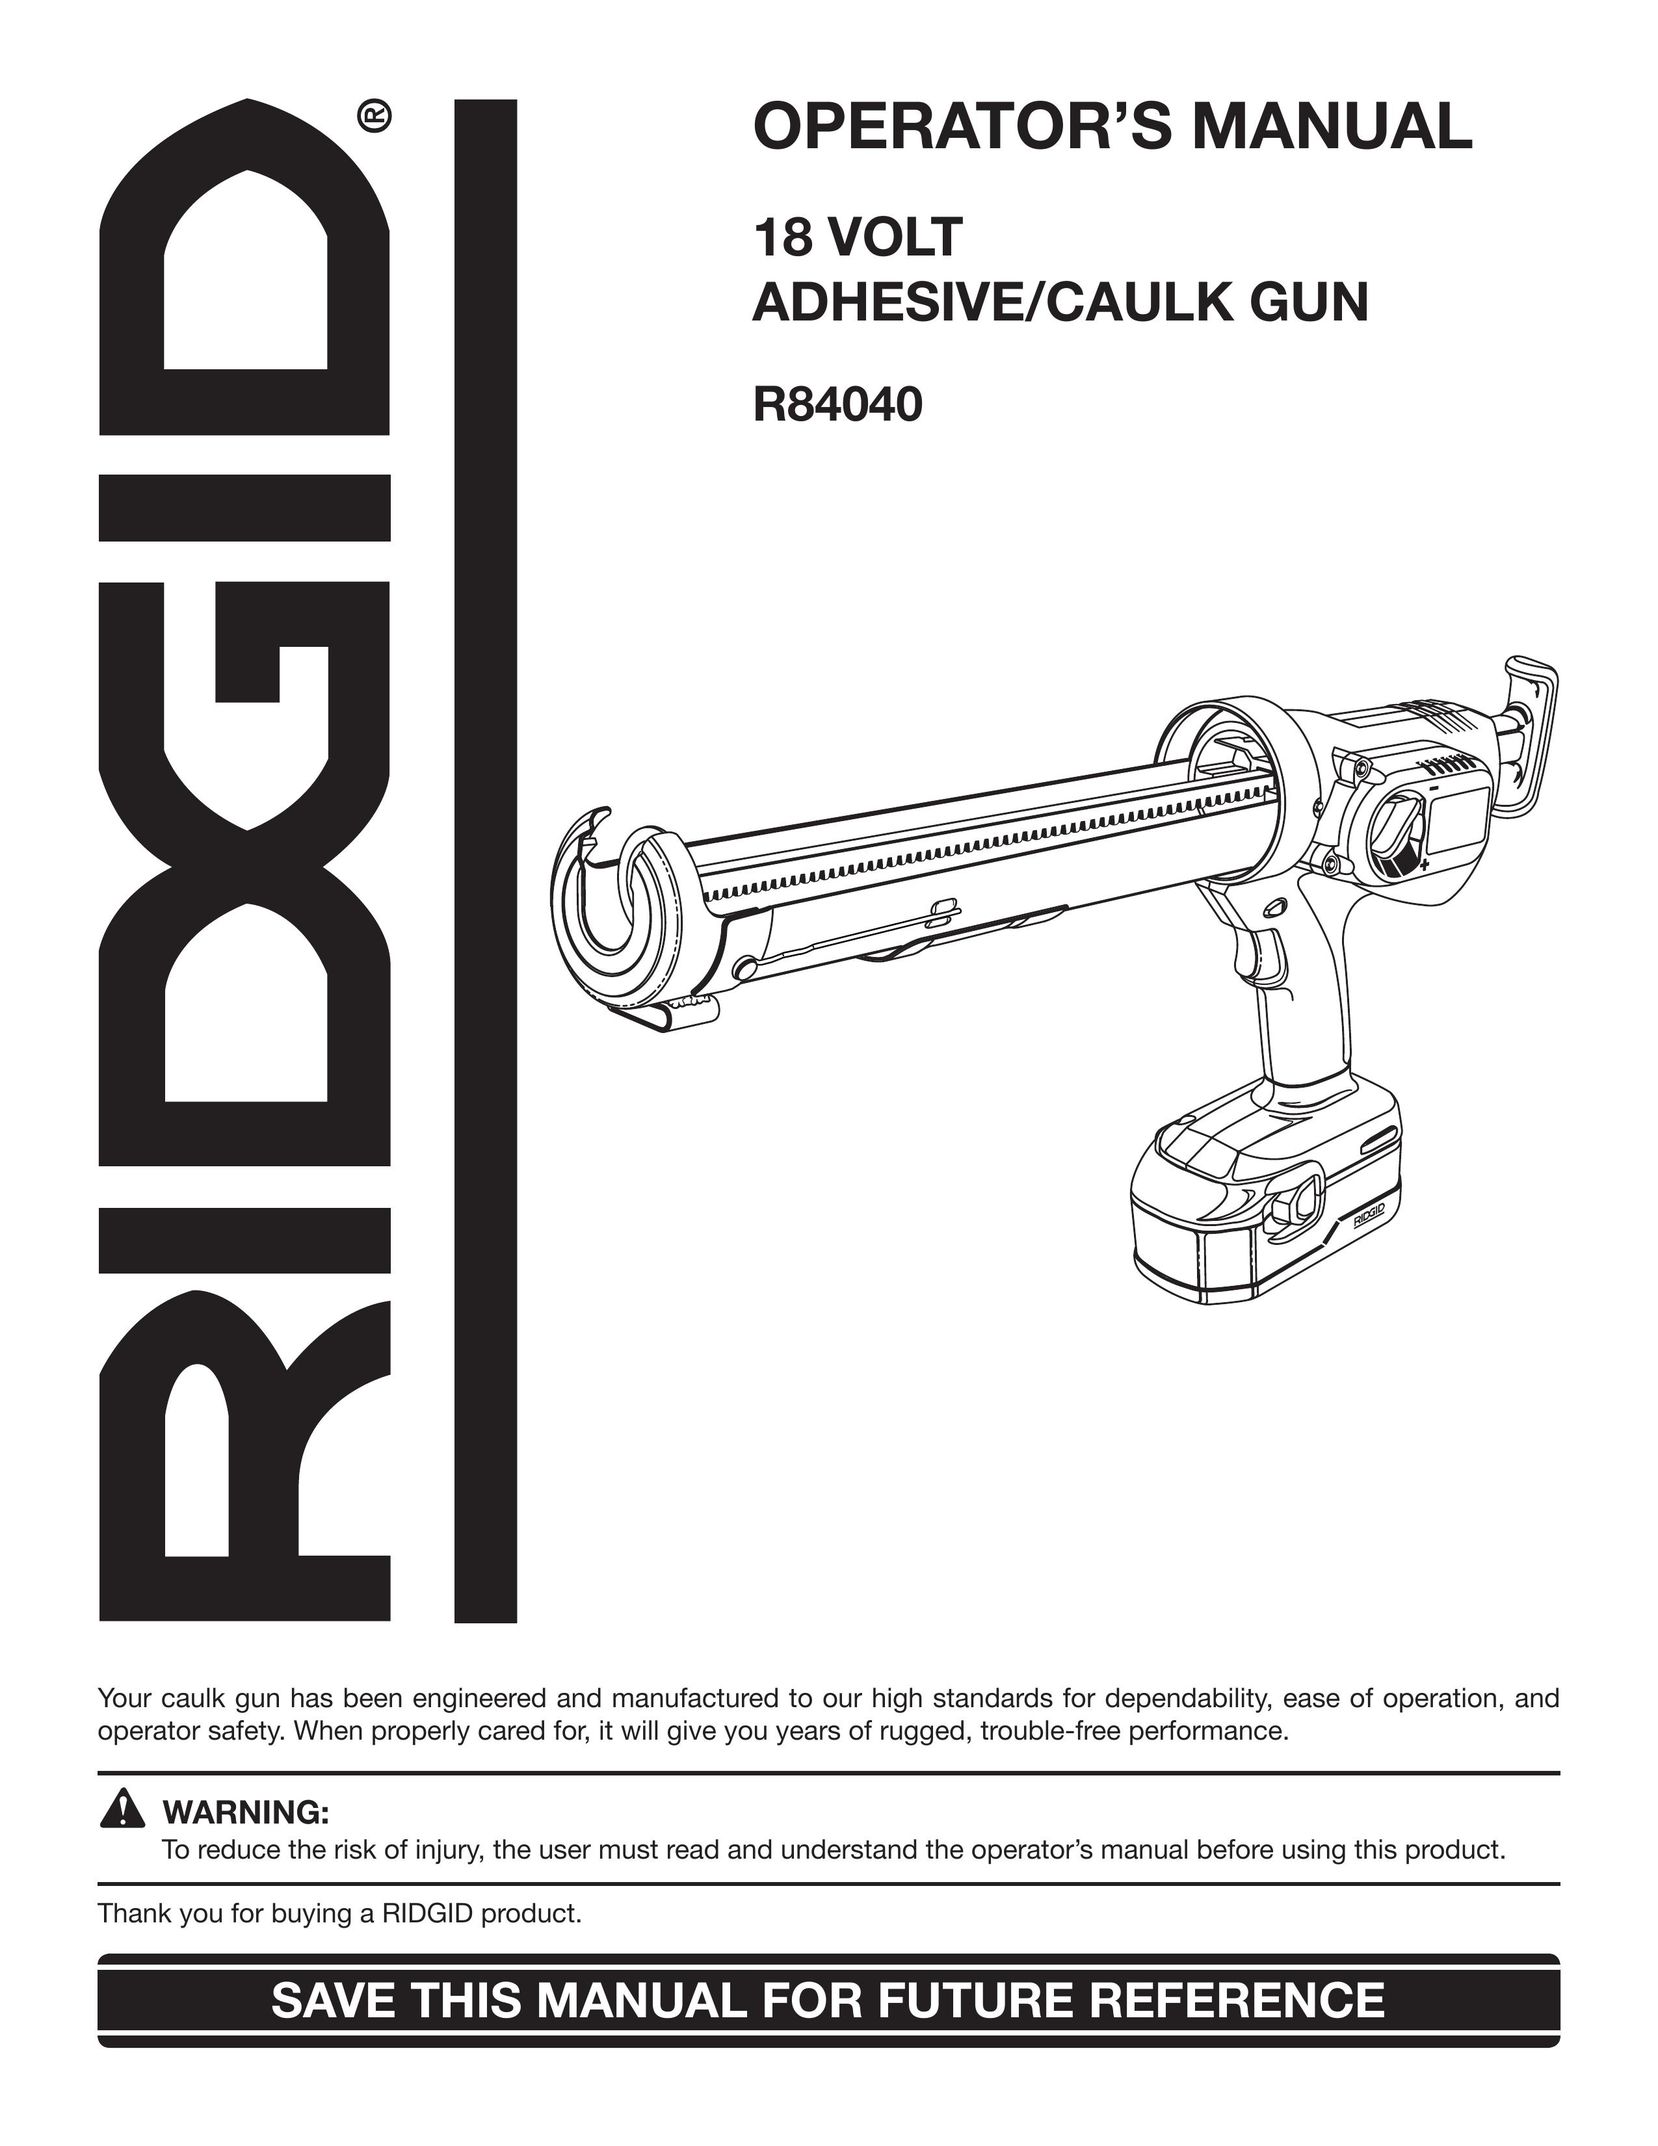 RIDGID R84040 Caulking Gun User Manual